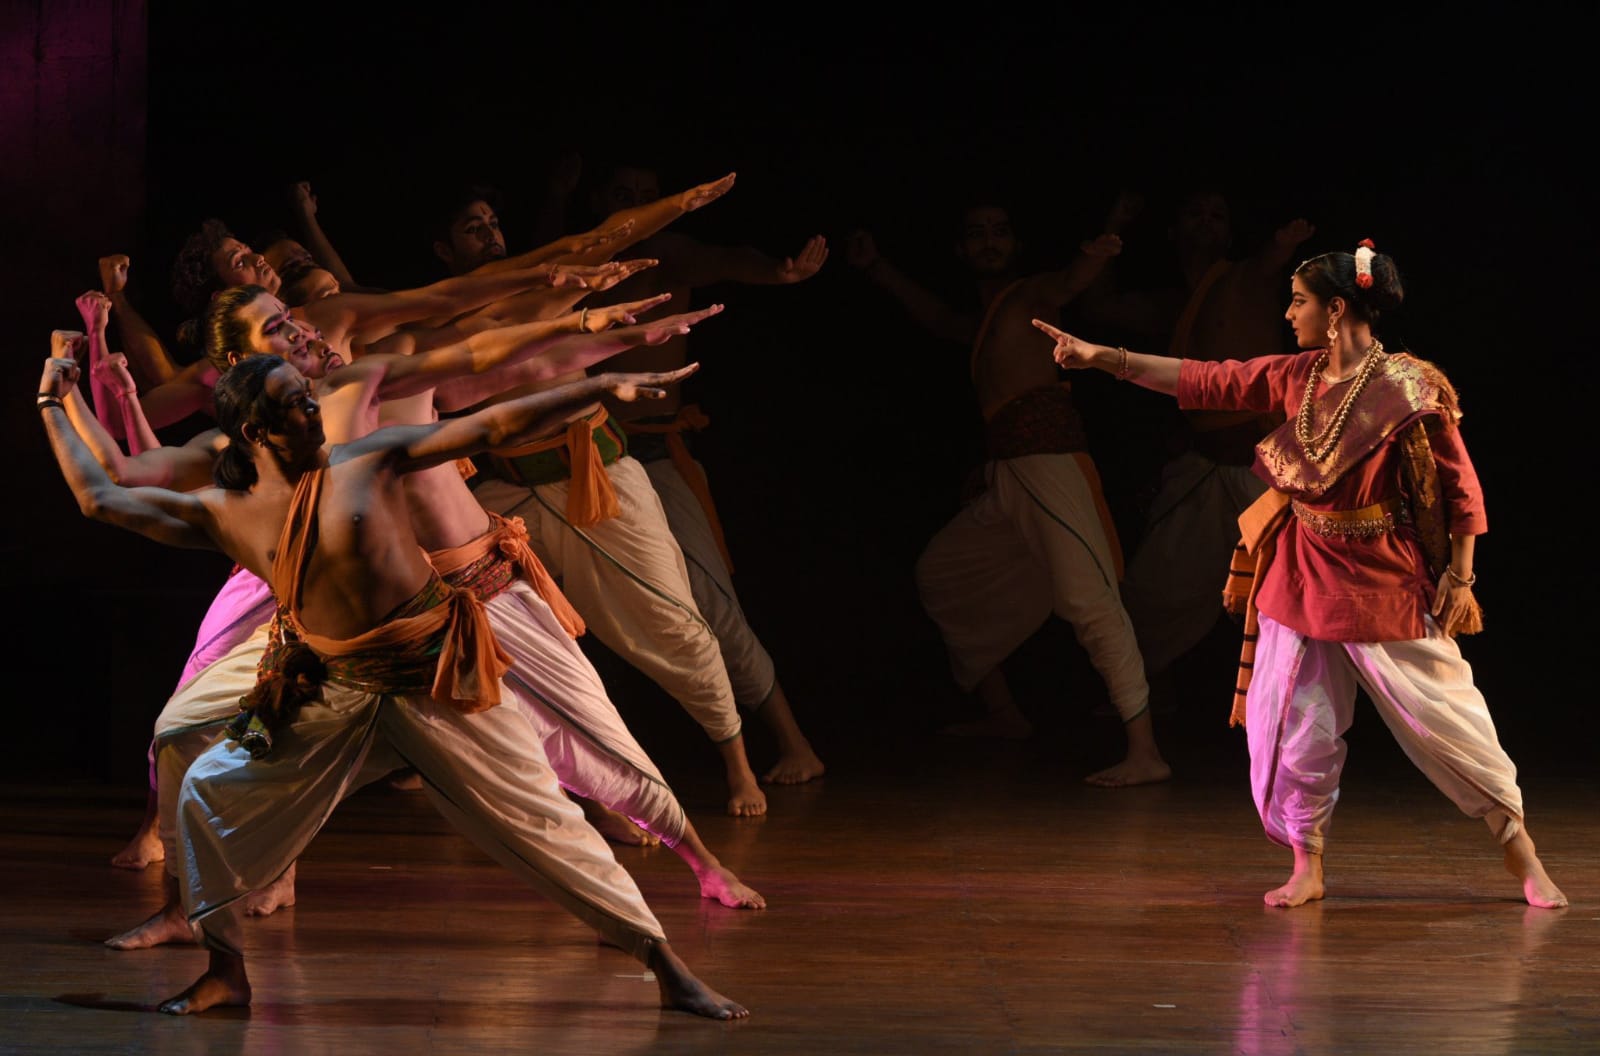 Dance-drama recreates grandeur of legendary Kashmiri queens